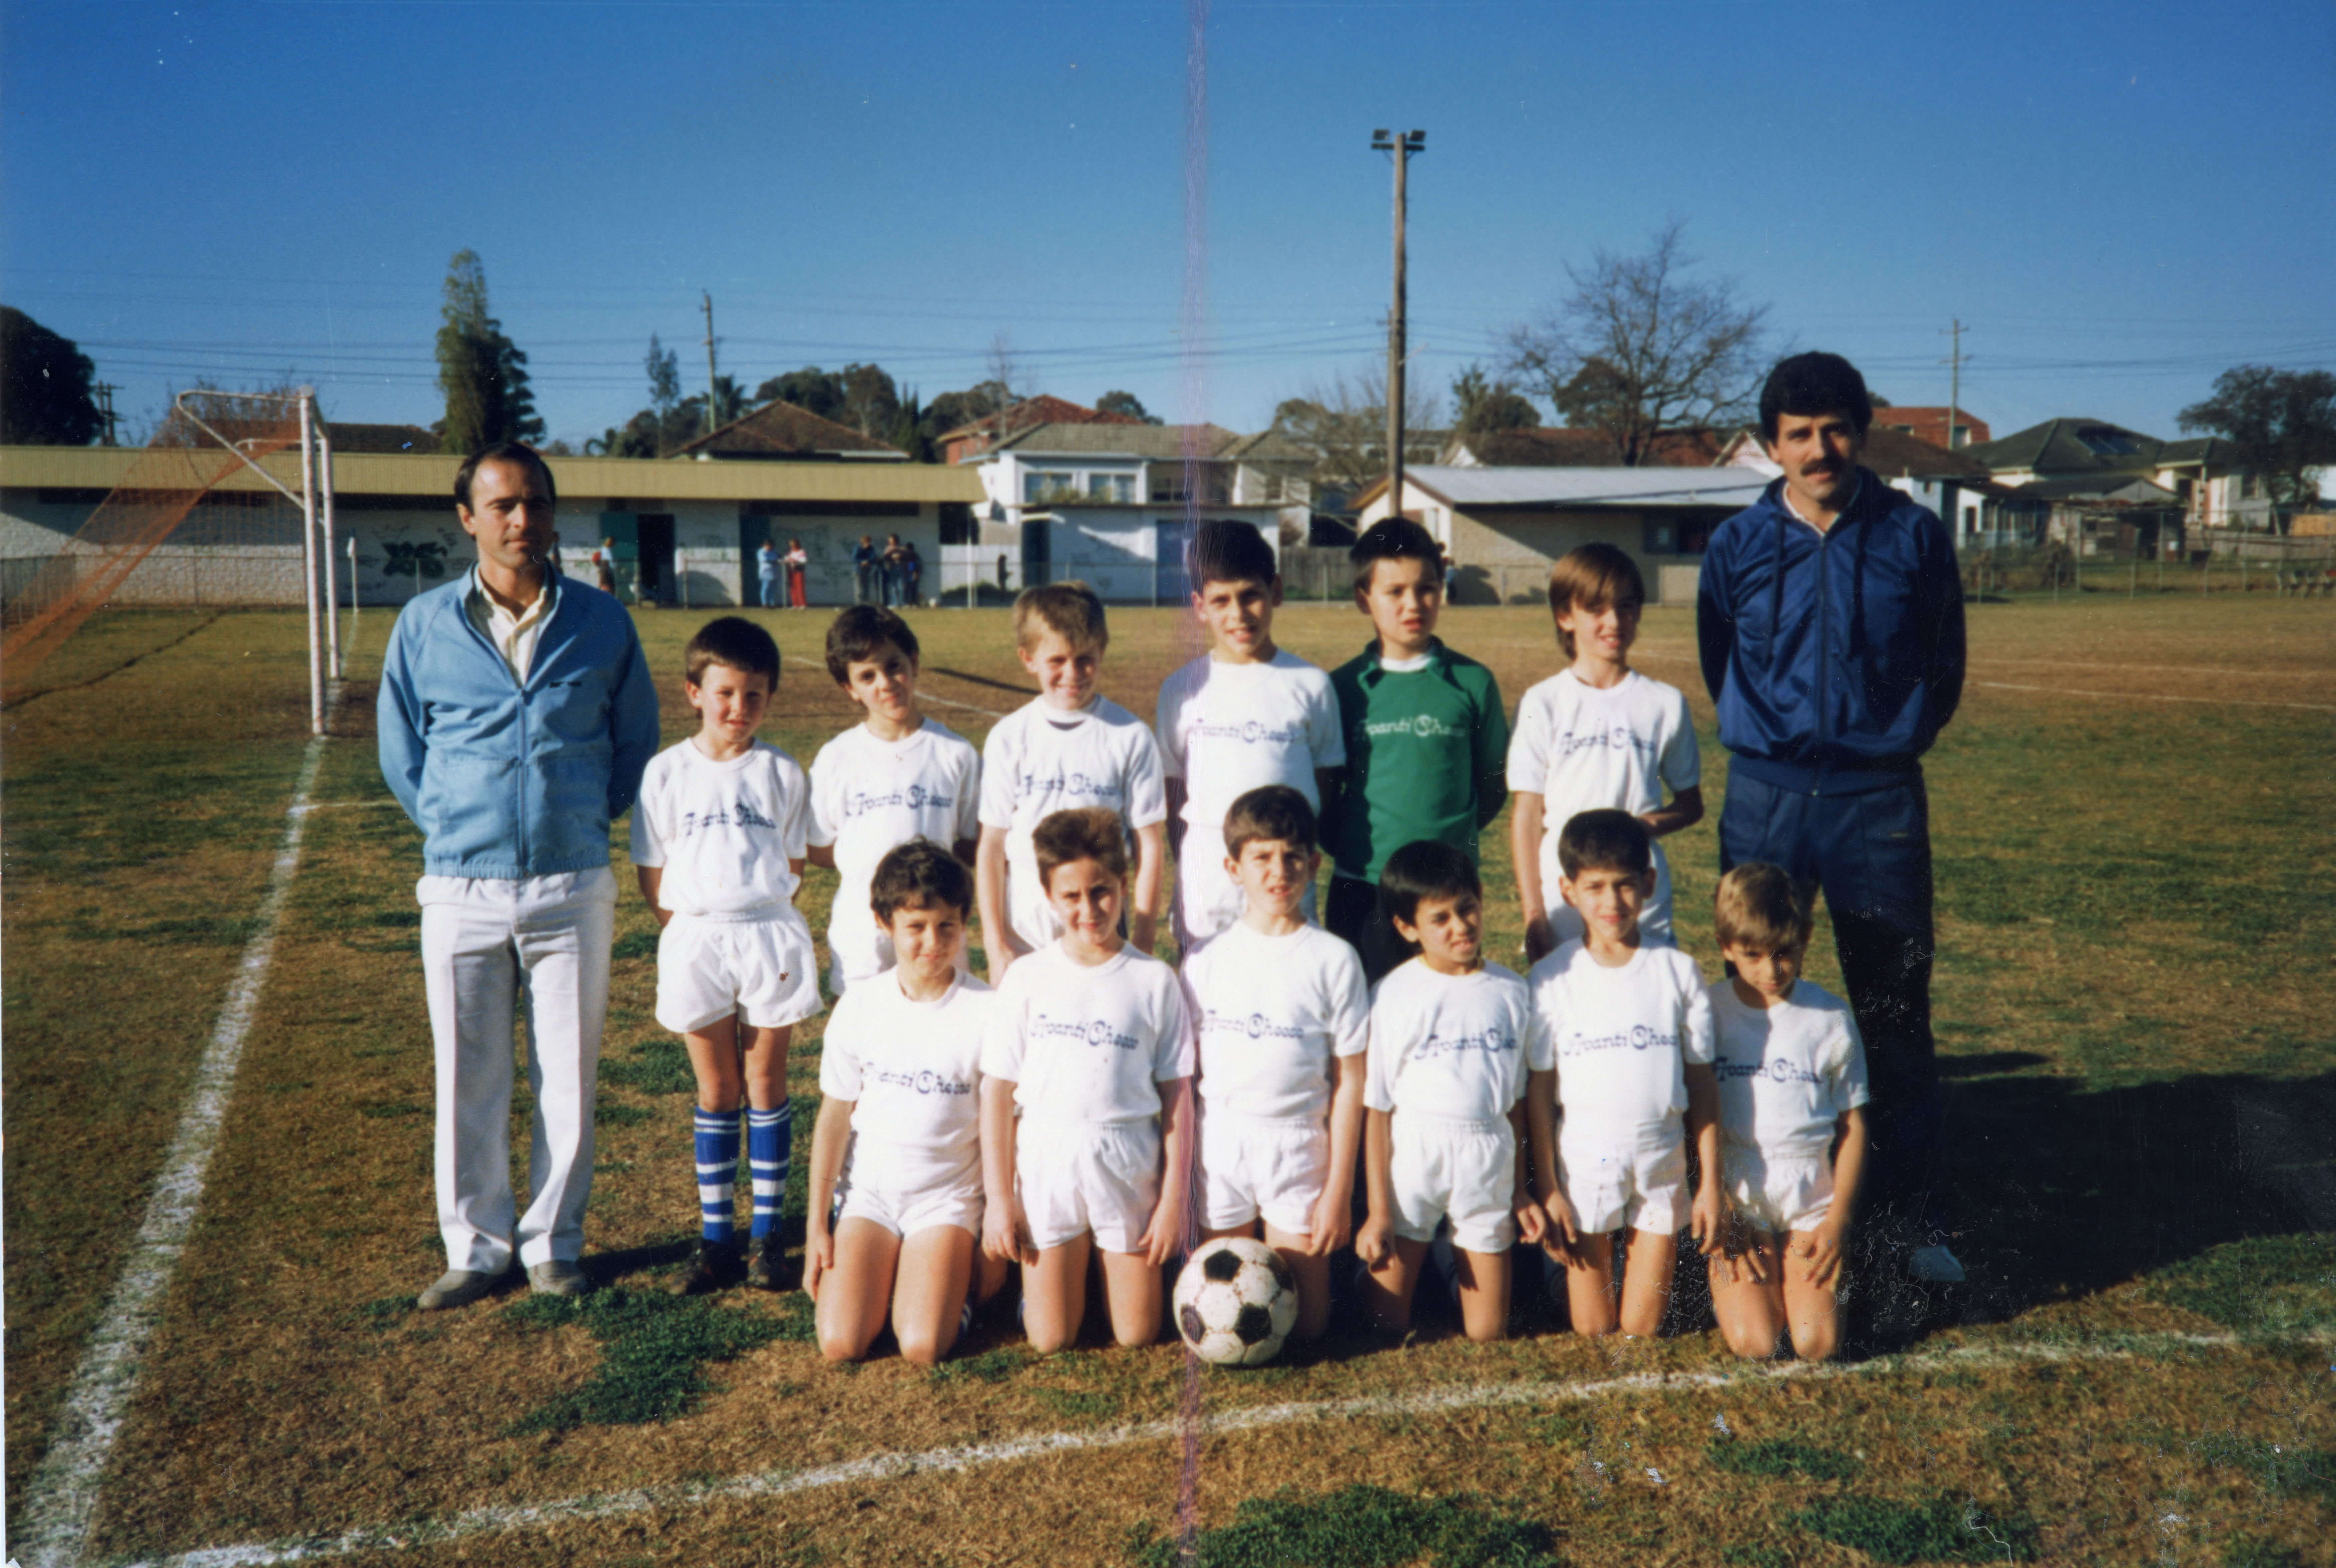 Group portrait of the under-sevens soccer team at Phillips Park, Lurnea, 1988.